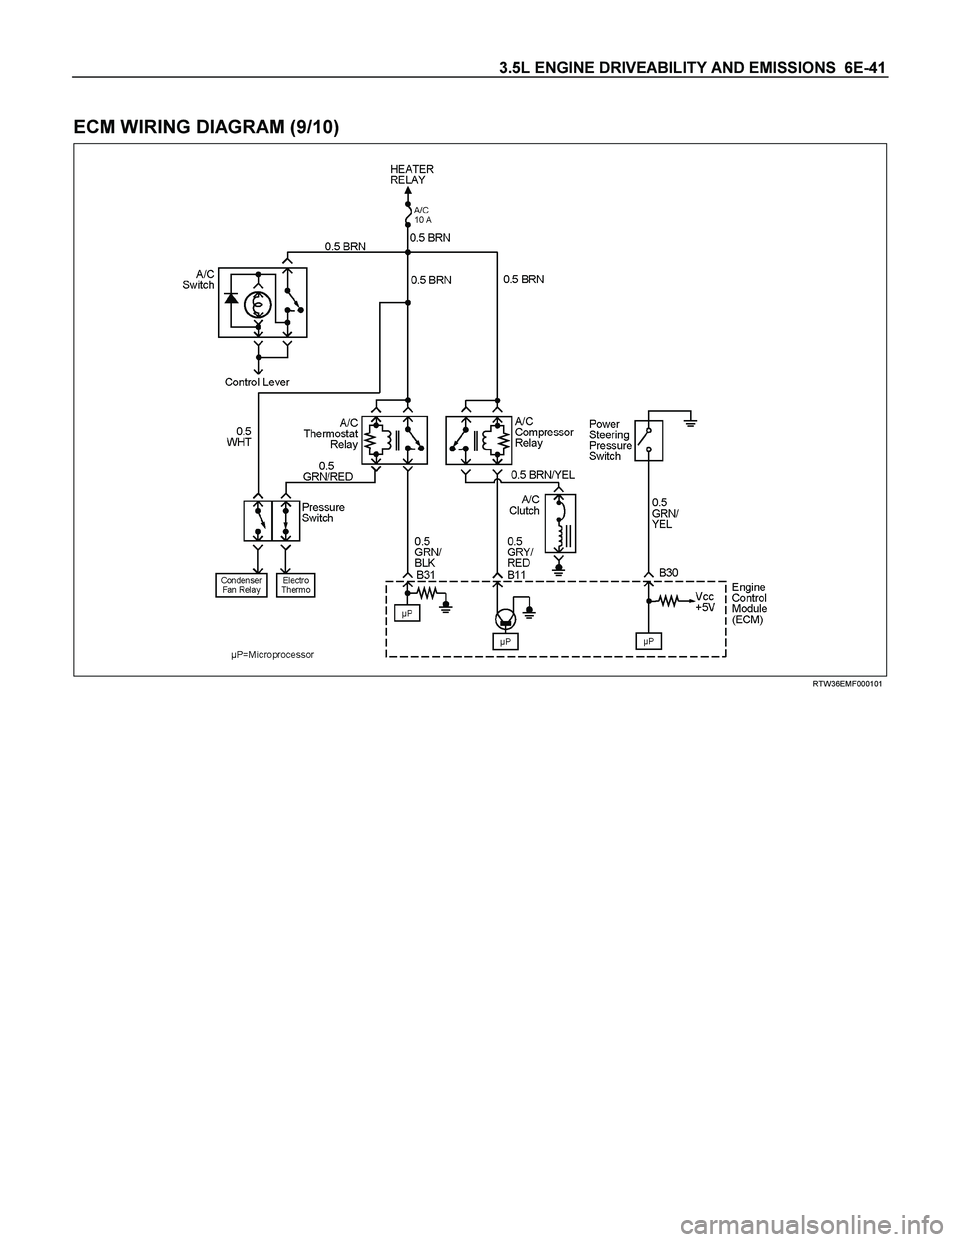 ISUZU TF SERIES 2004  Workshop Manual 3.5L ENGINE DRIVEABILITY AND EMISSIONS  6E-41 
 
ECM WIRING DIAGRAM (9/10) 
  
 
 
RTW36EMF000101 
  